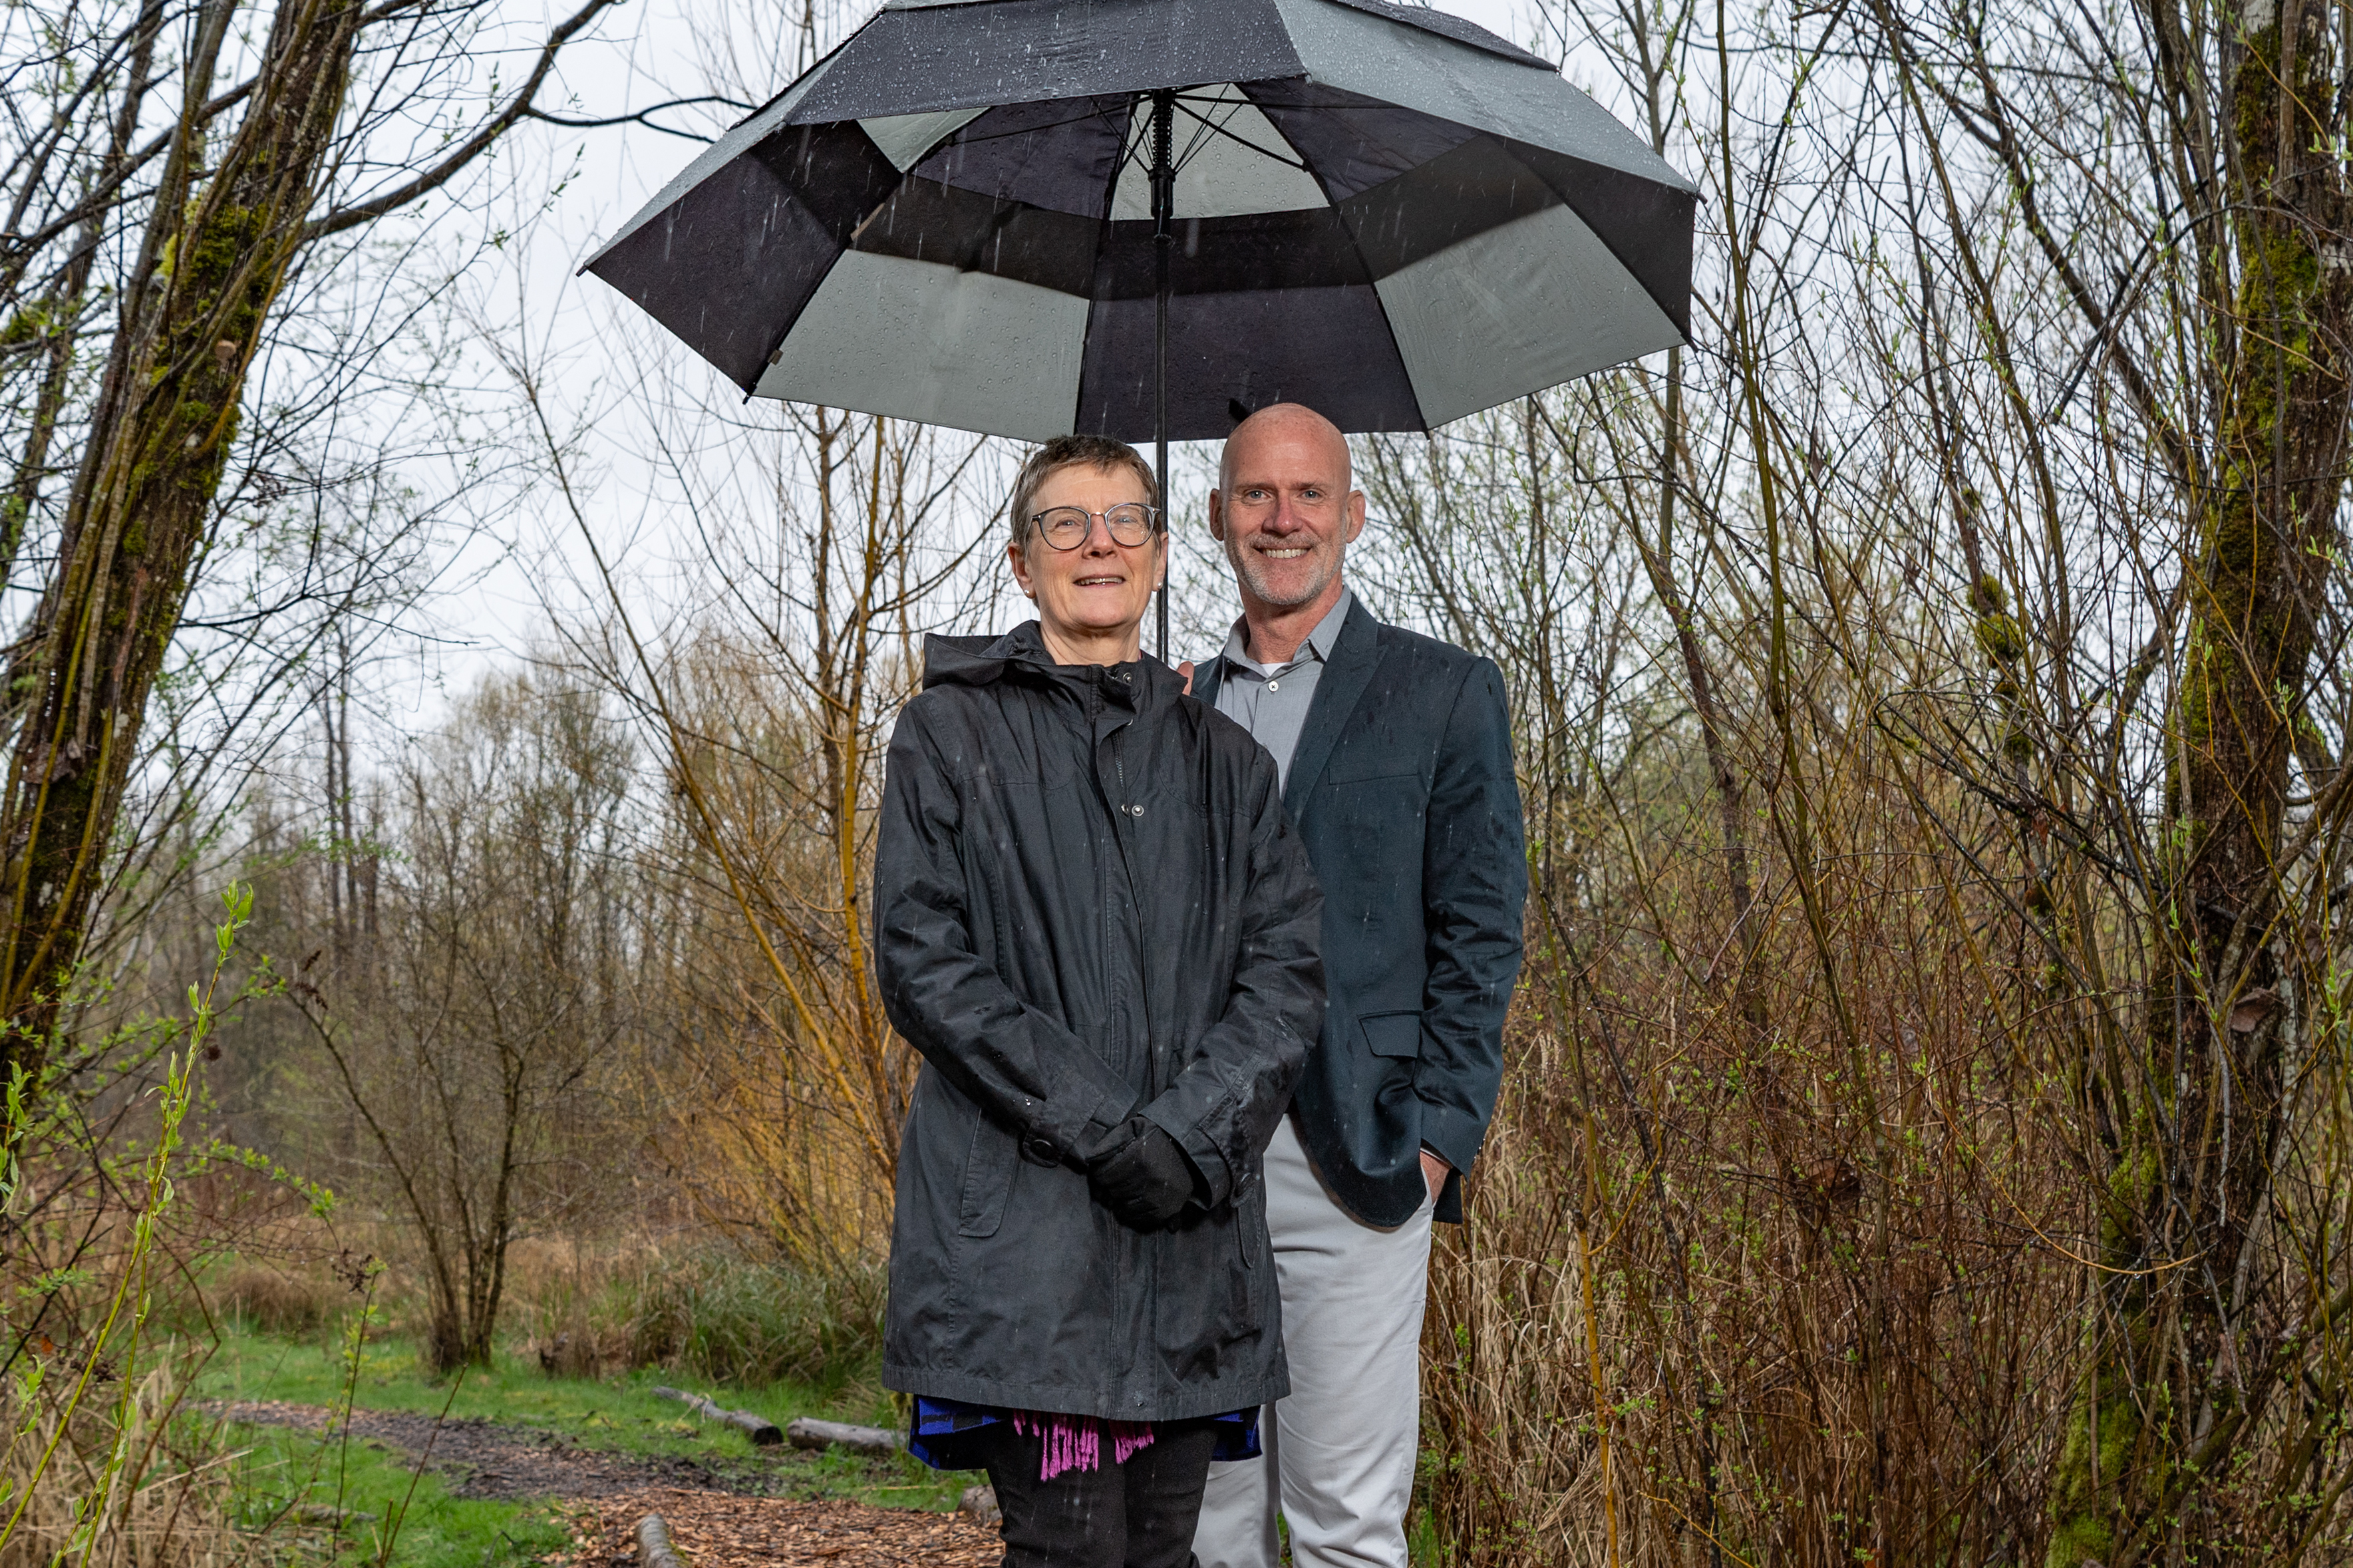 President Murray and Chancellor Esterberg under an umbrella in the wetland